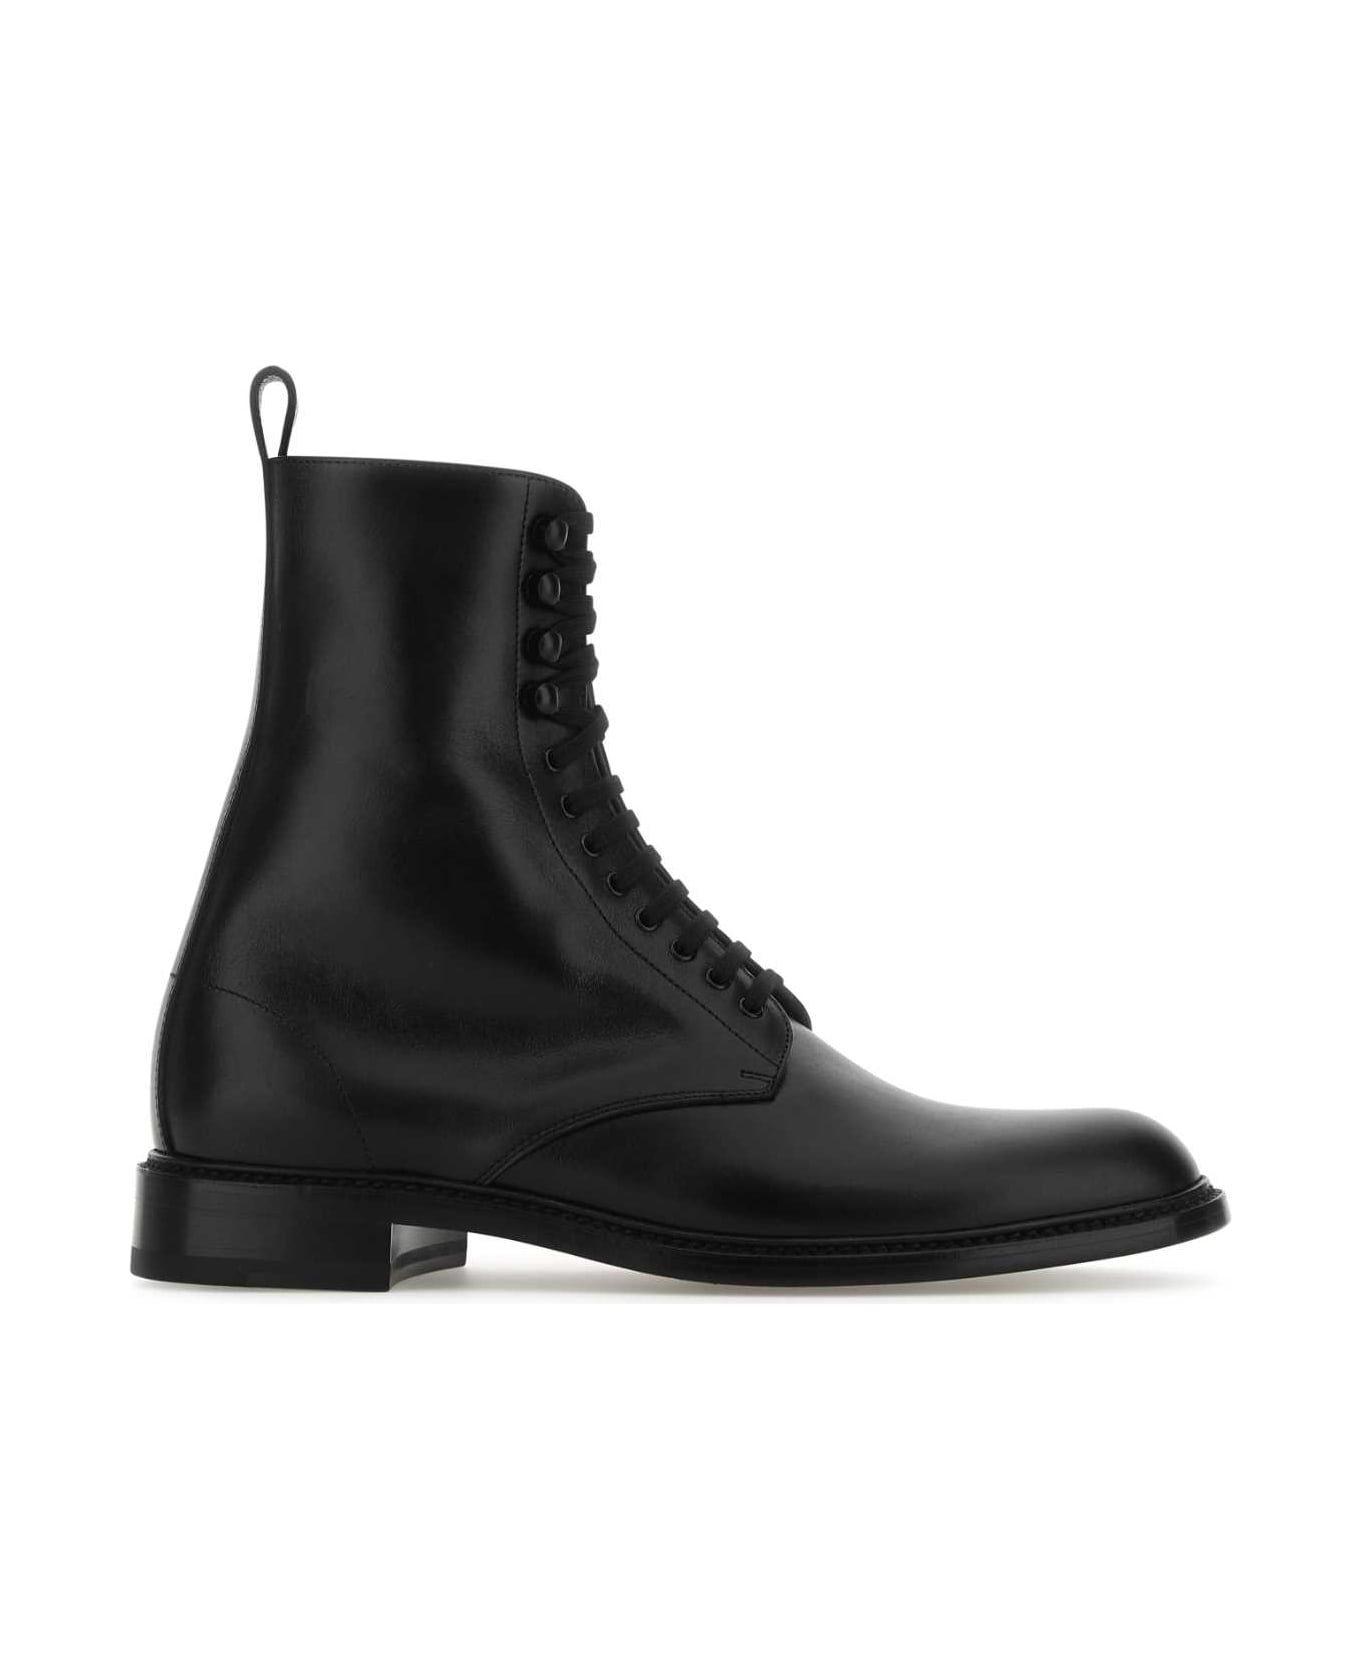 Saint Laurent Army Ankle Boots - Black ブーツ